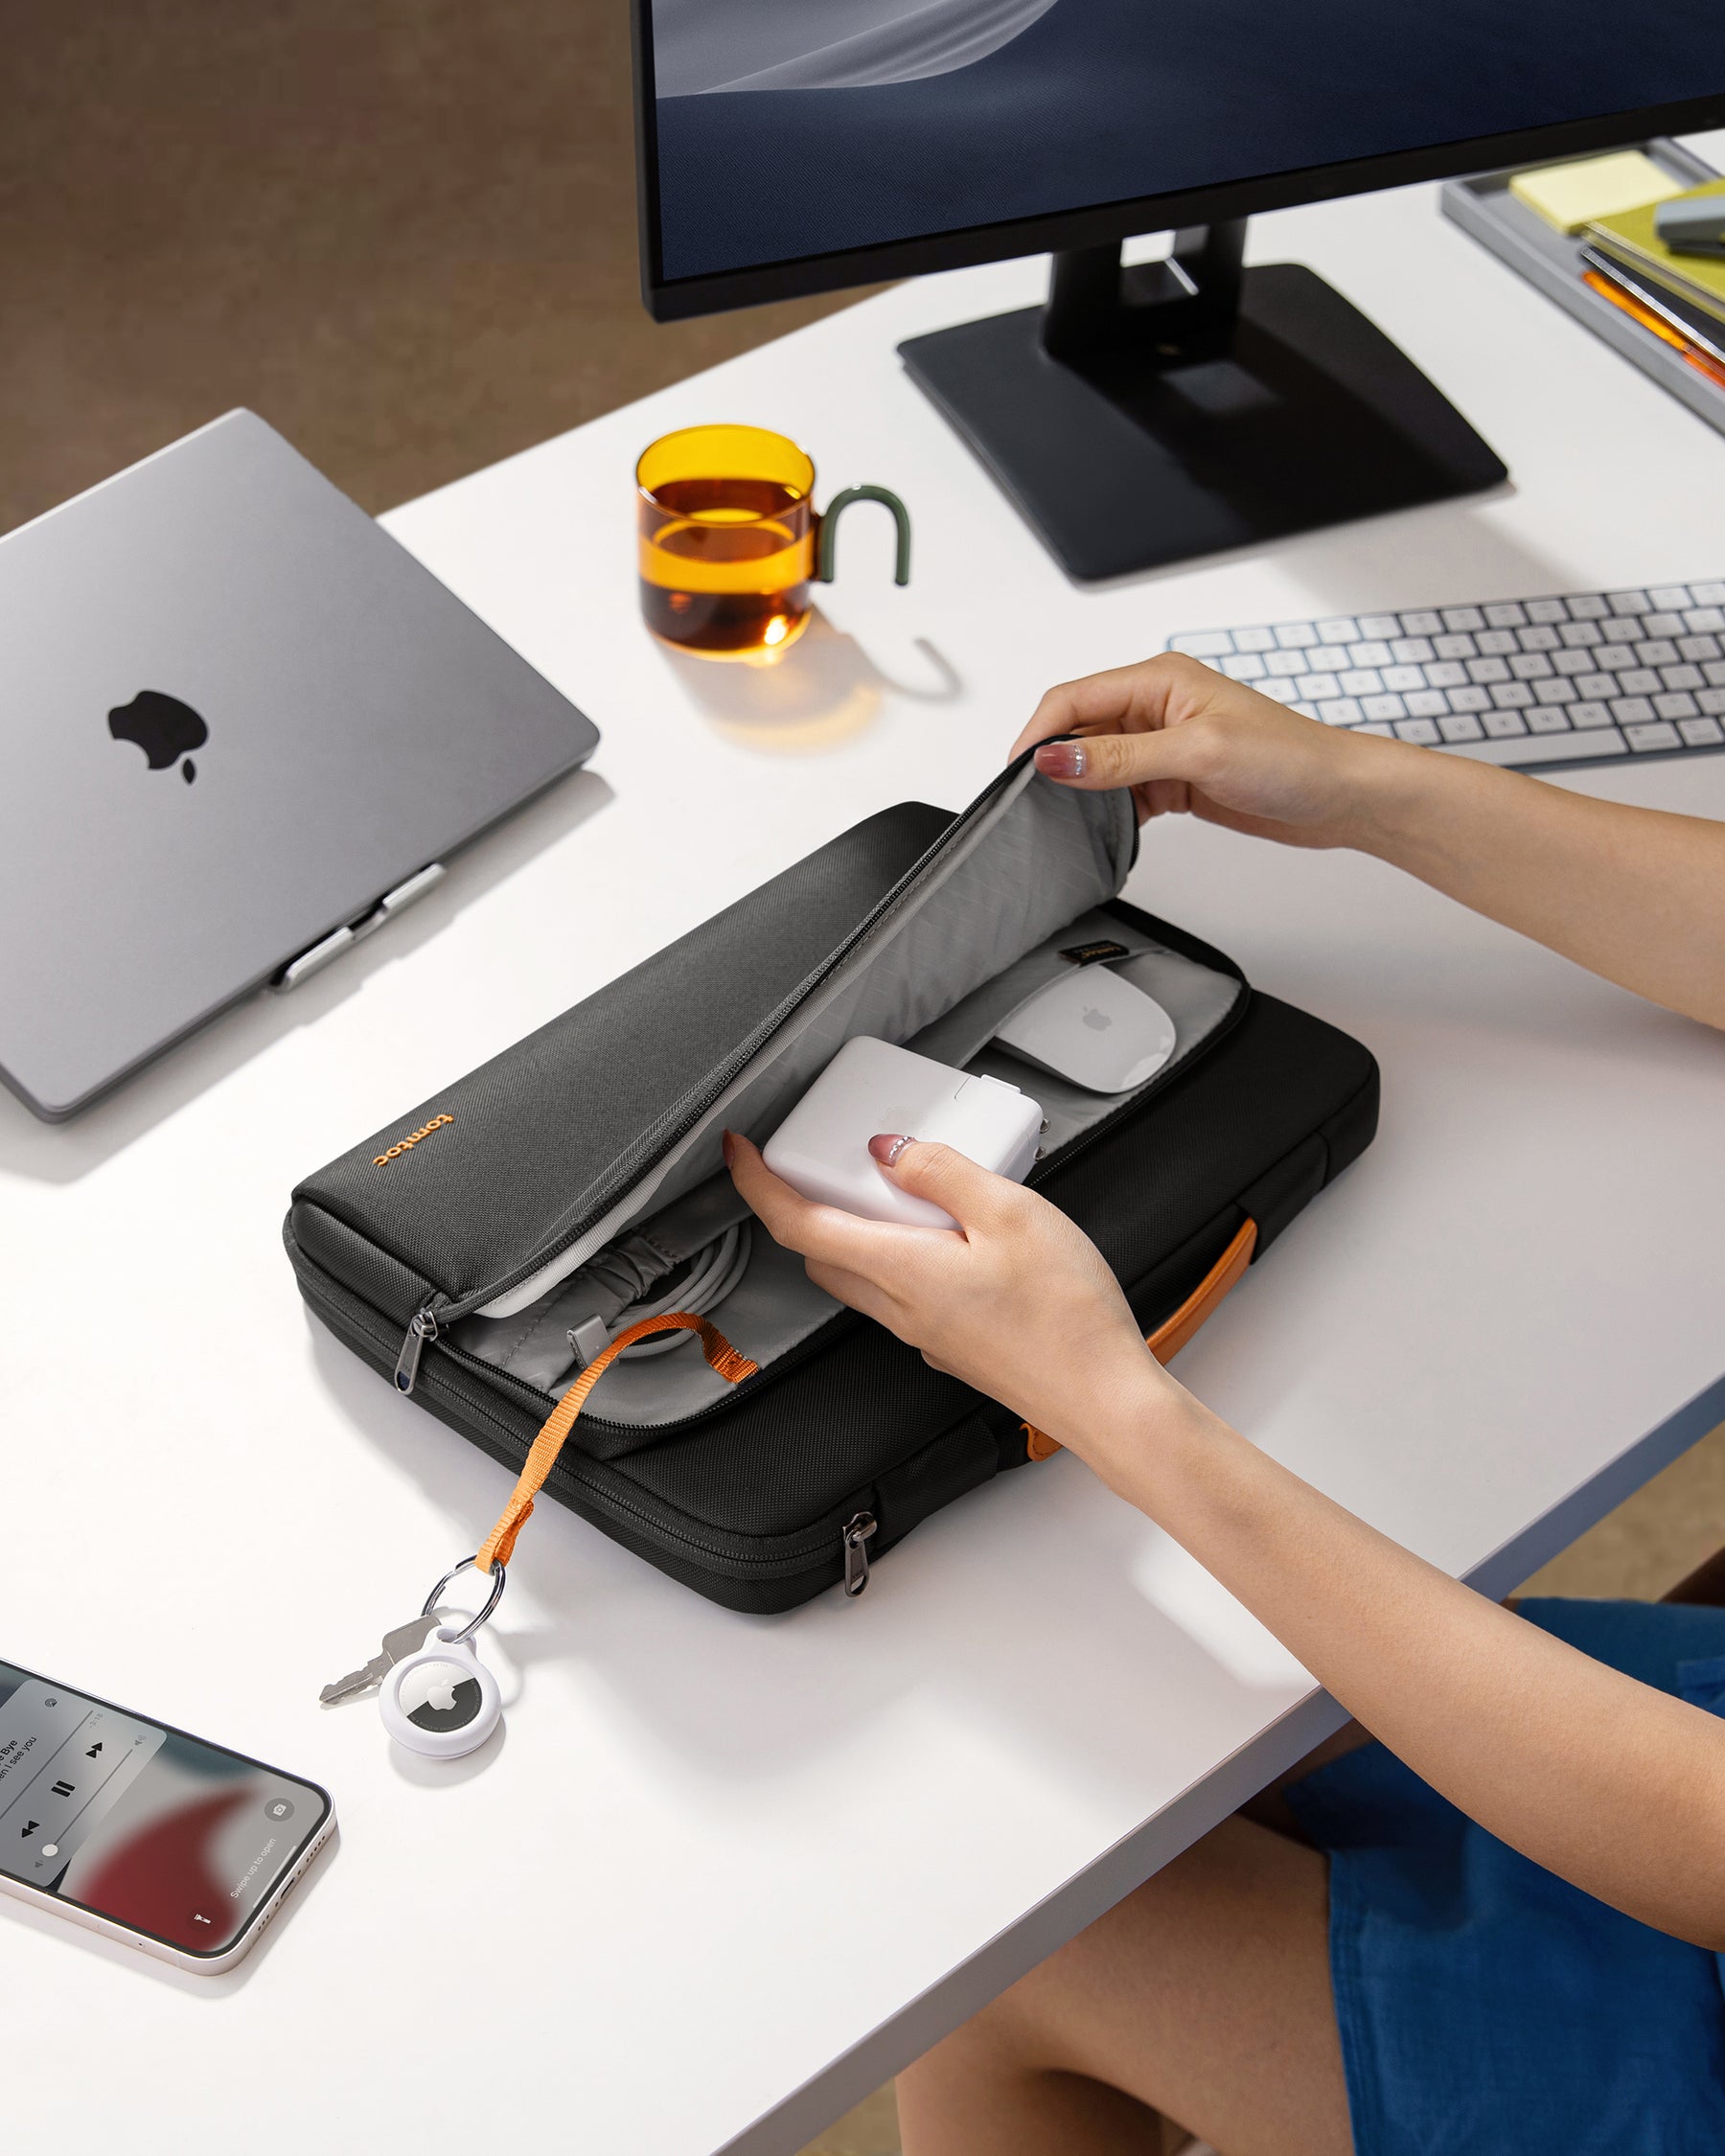 tomtoc 14 Inch Versatile 360 Protective Laptop Sleeve Briefcase - Black